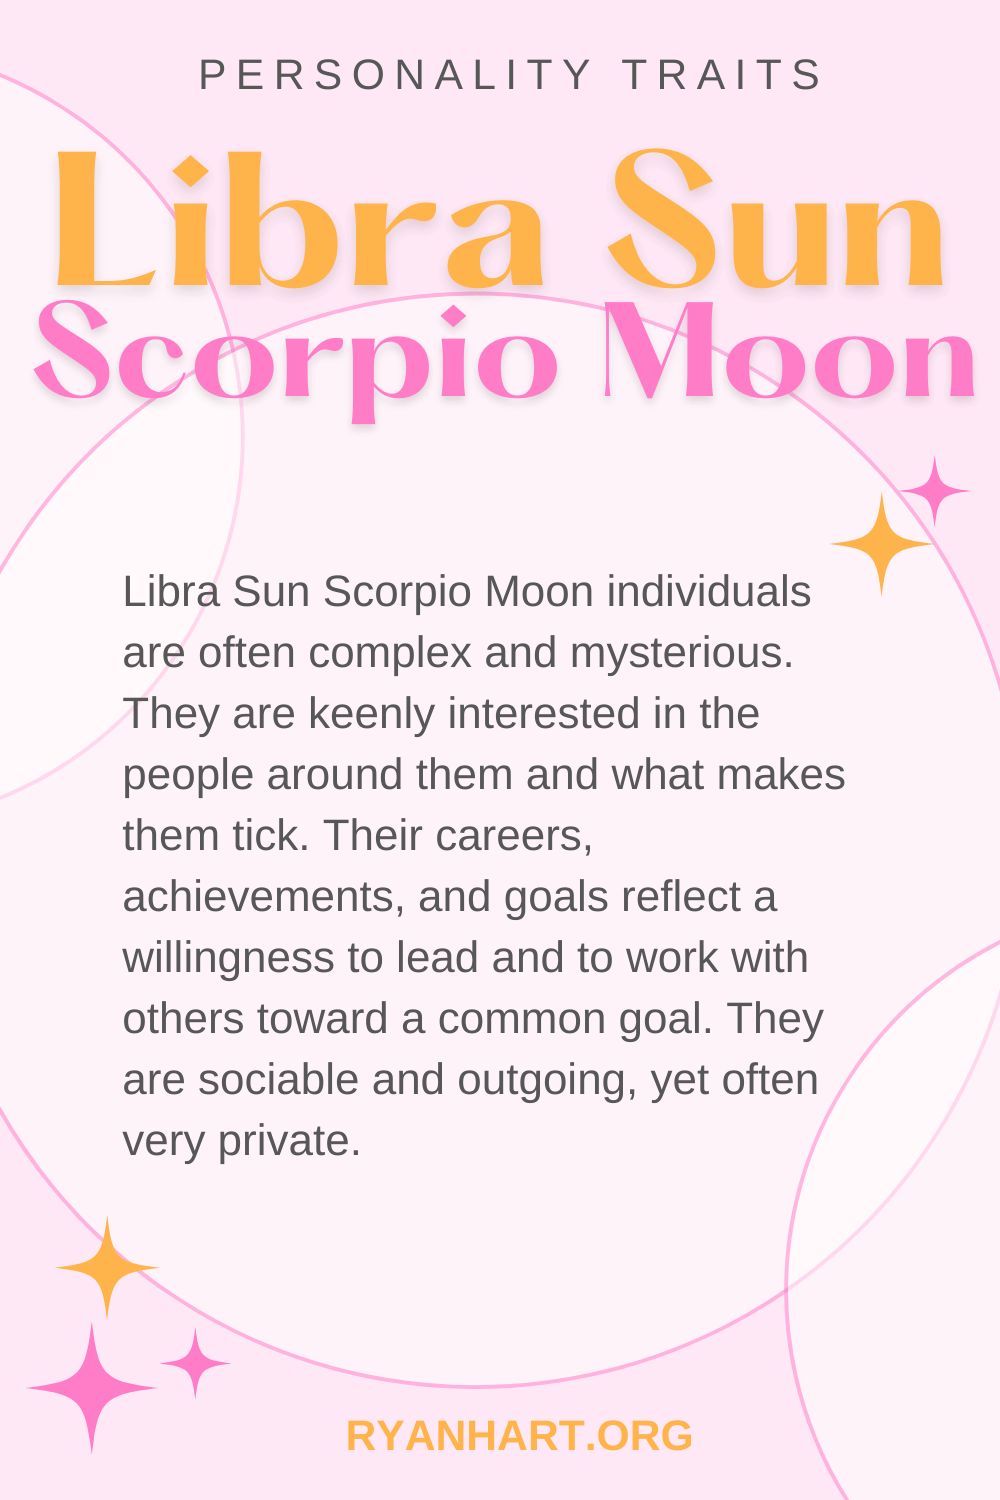 Libra Sun Scorpio Moon Description